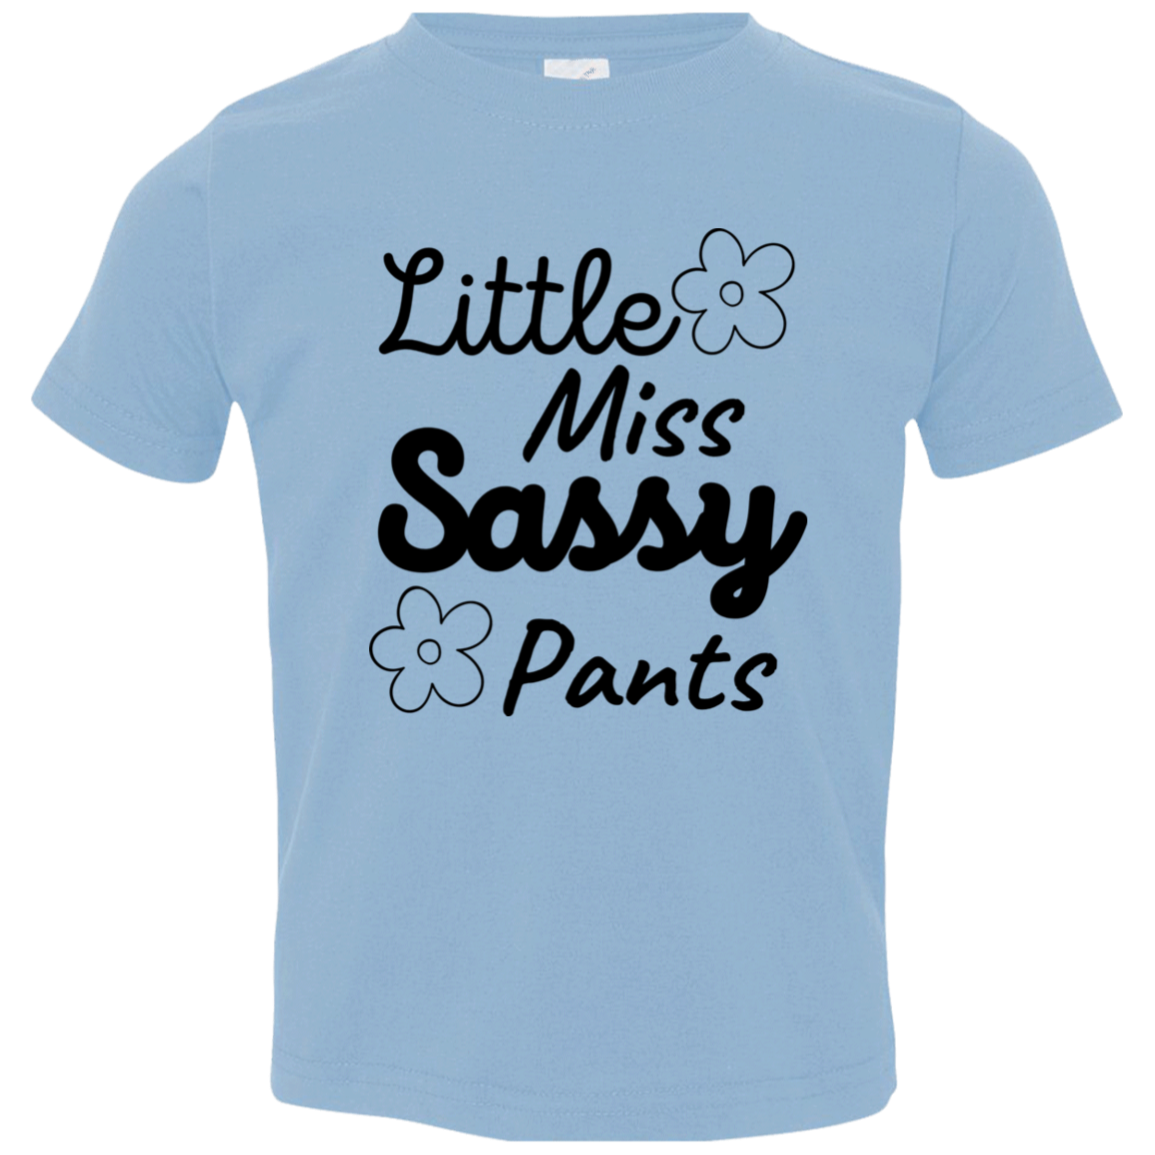 Little miss Sassy pants!